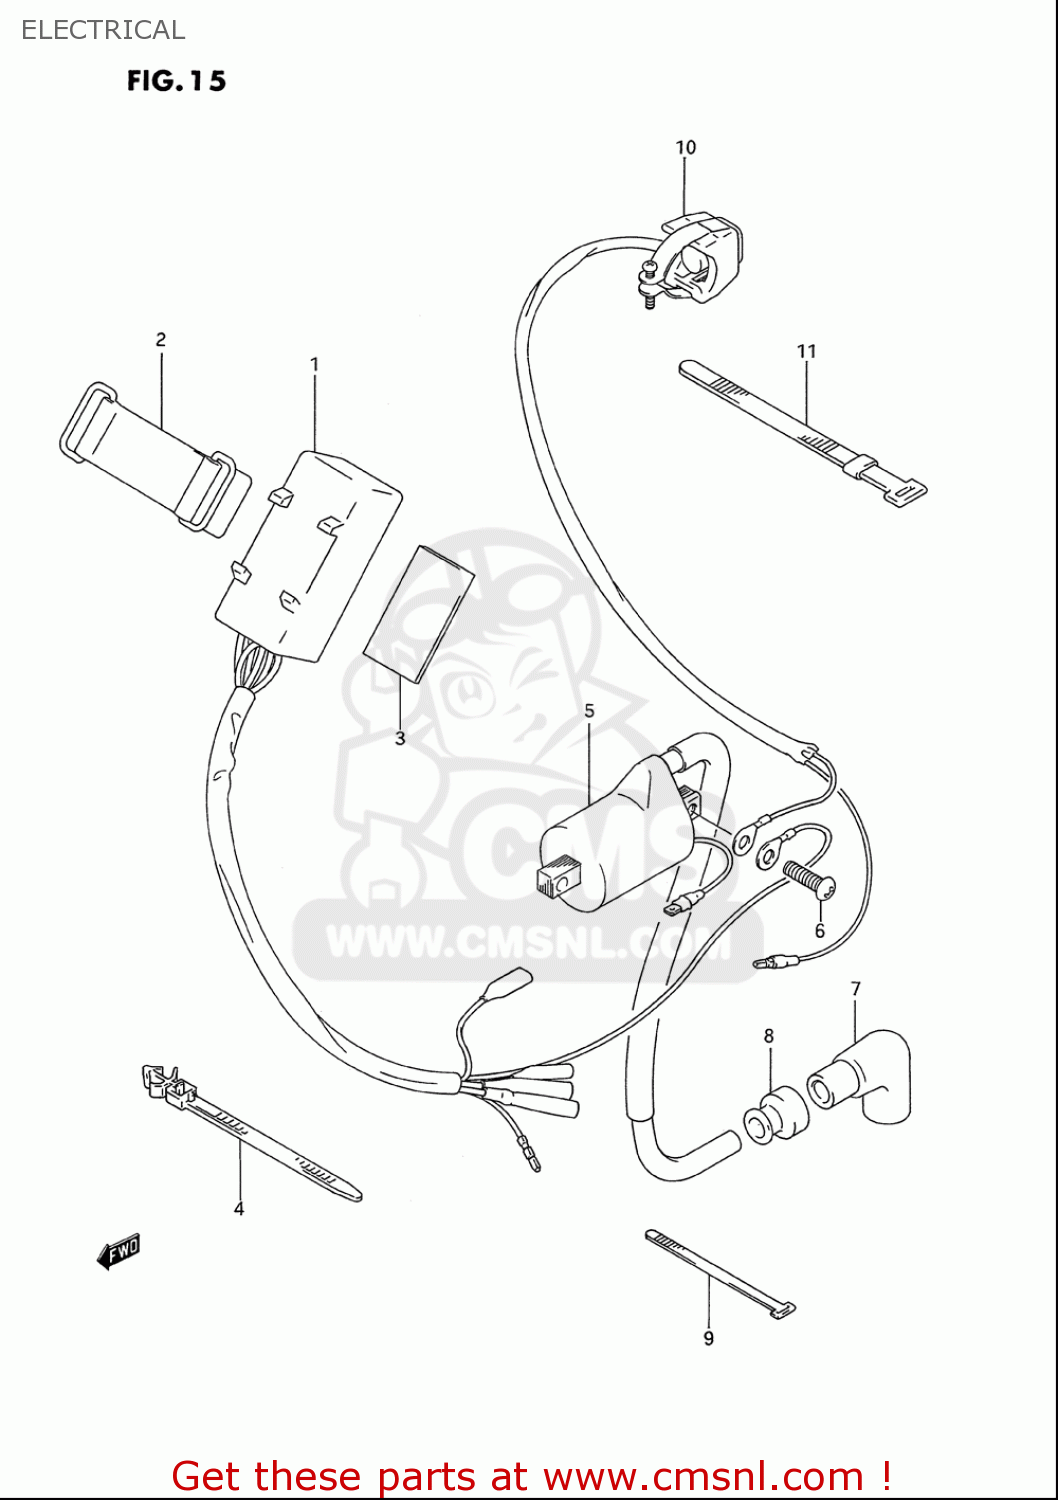 96-00 rm250 wiring diagram